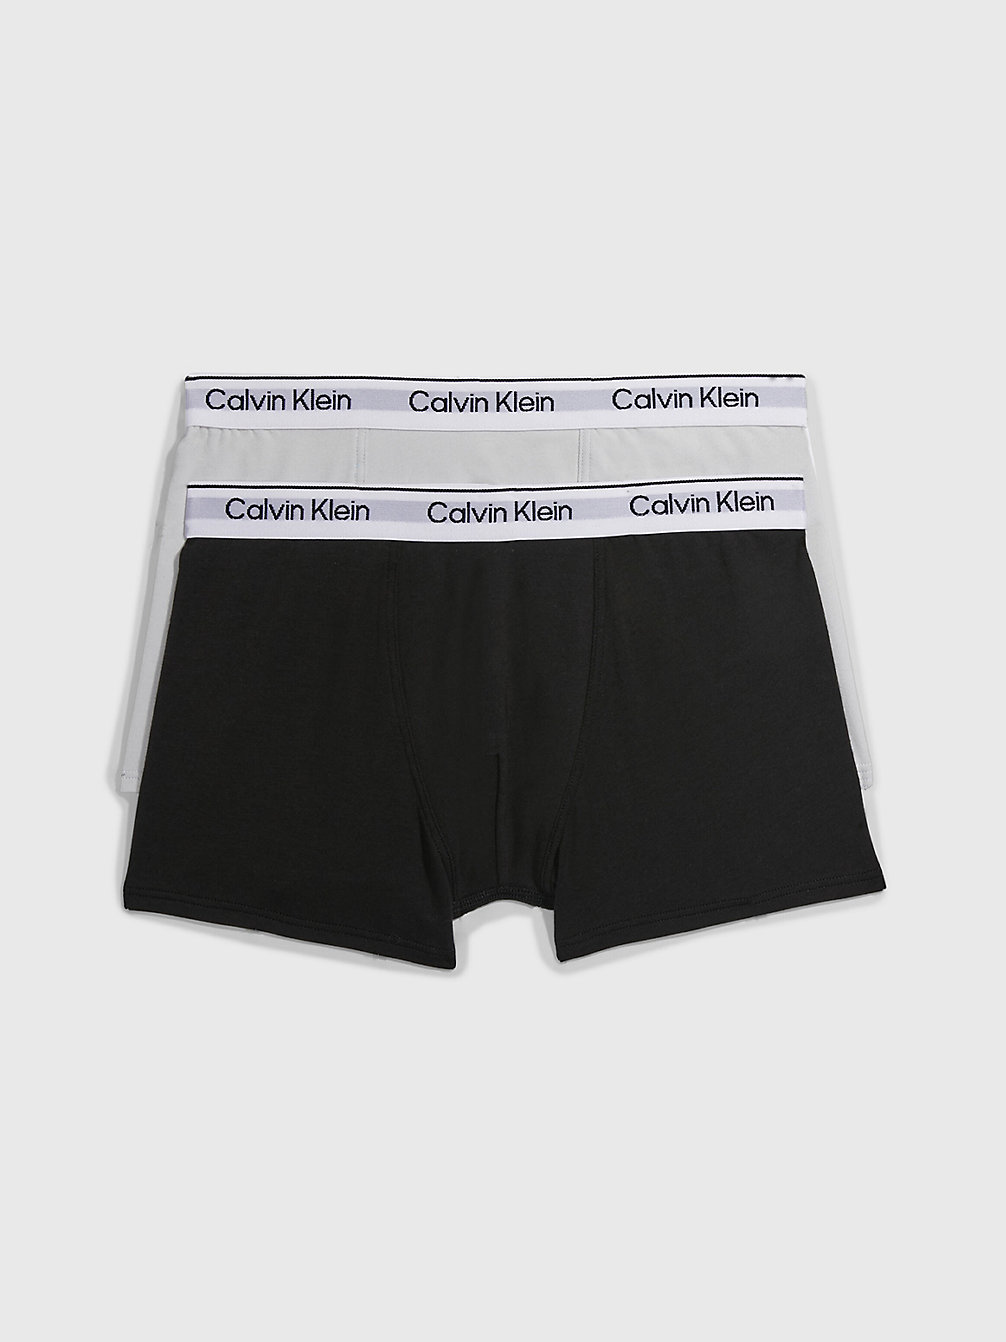 STONEGREY/PVHBLACK Lot De 2 Shortys Pour Garçon - Modern Cotton undefined garcons Calvin Klein